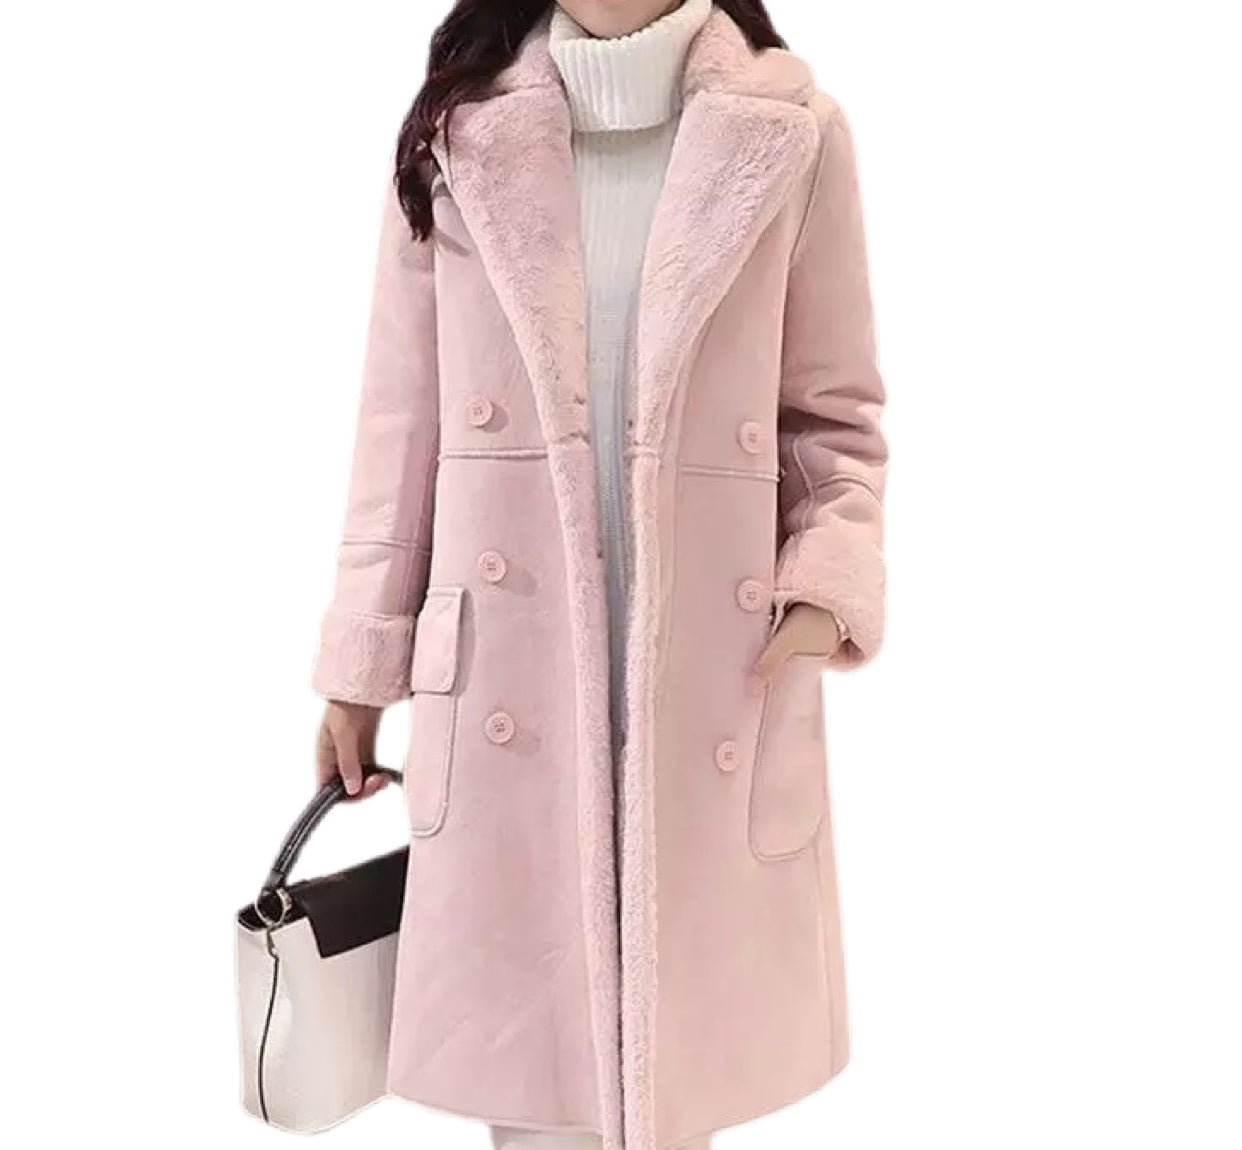 Sweetie Blush Pink Coat